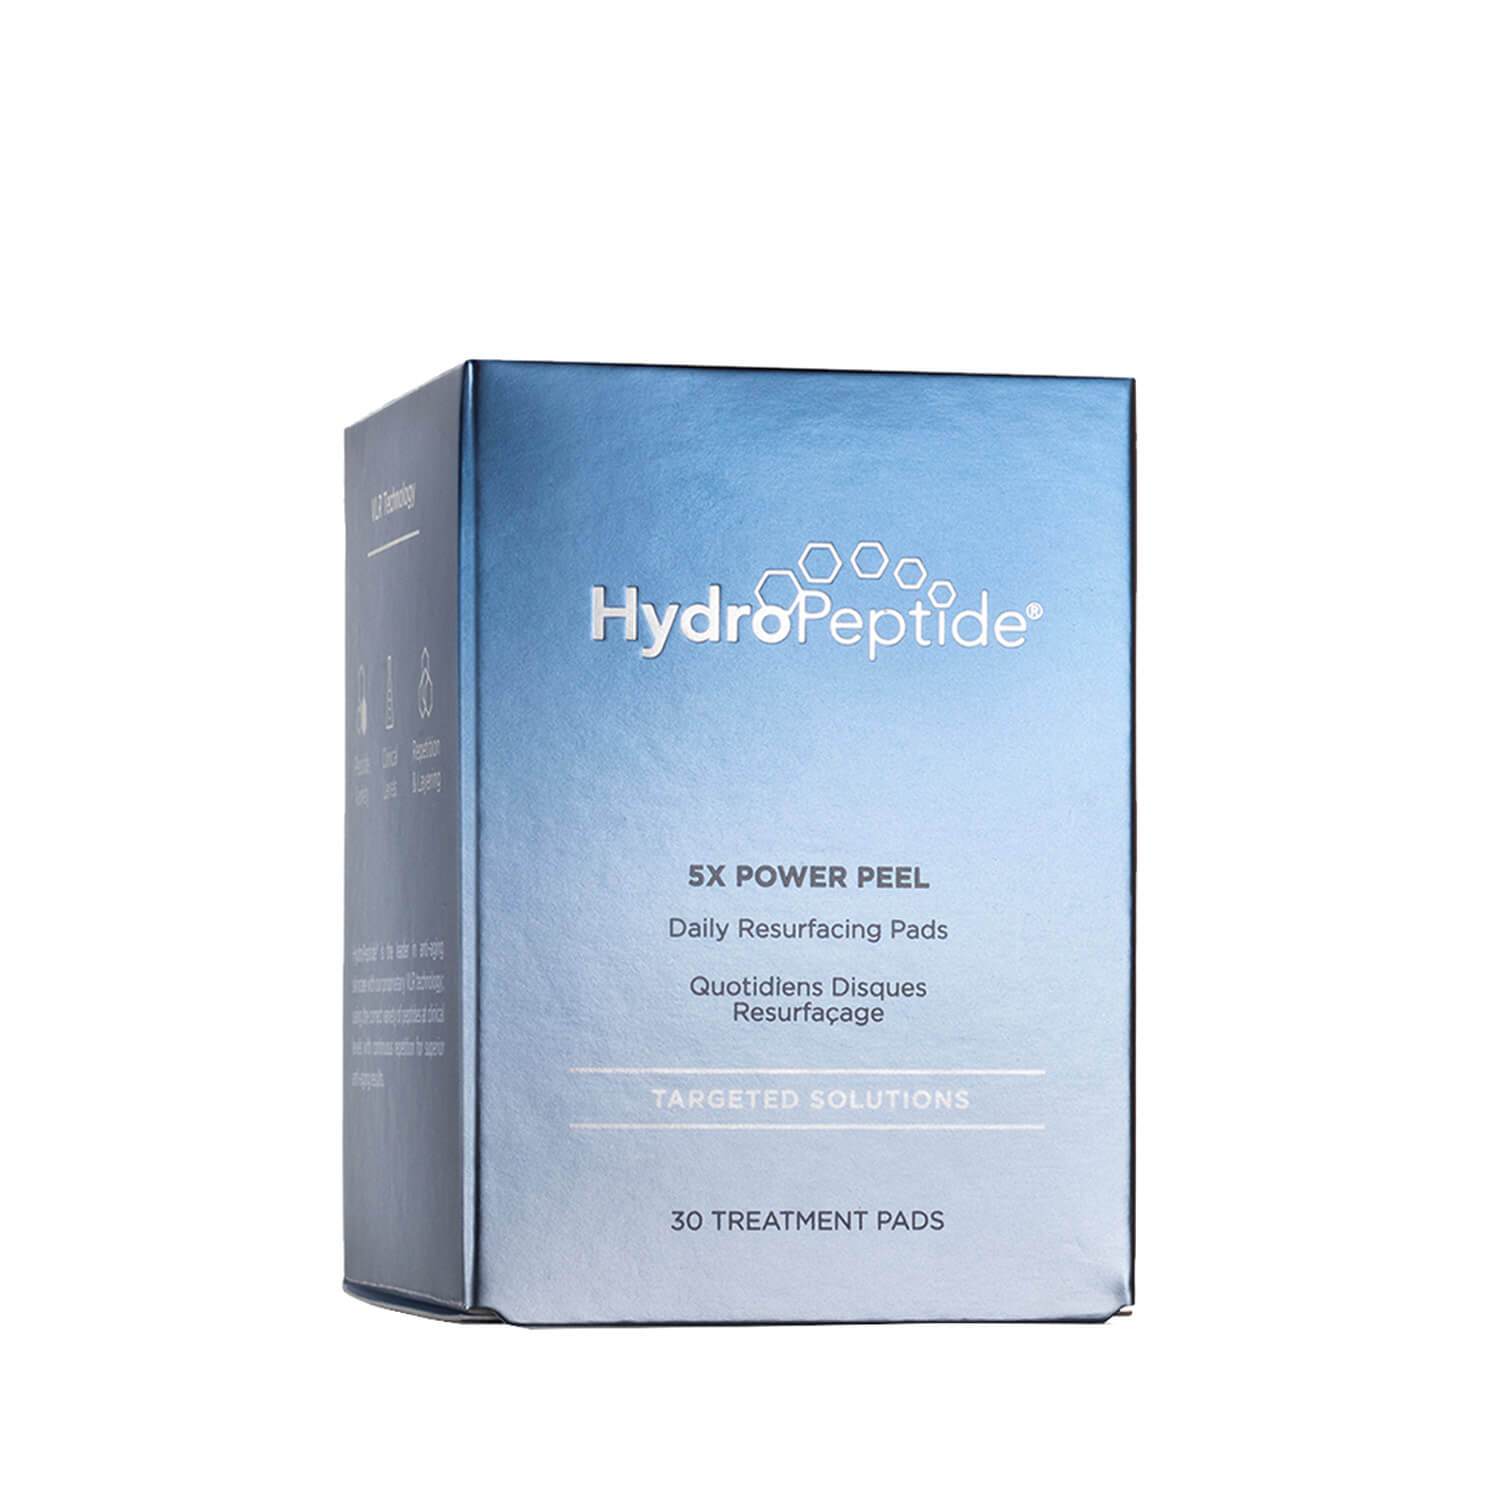 HydroPeptide 5X Power Peel abcclinc